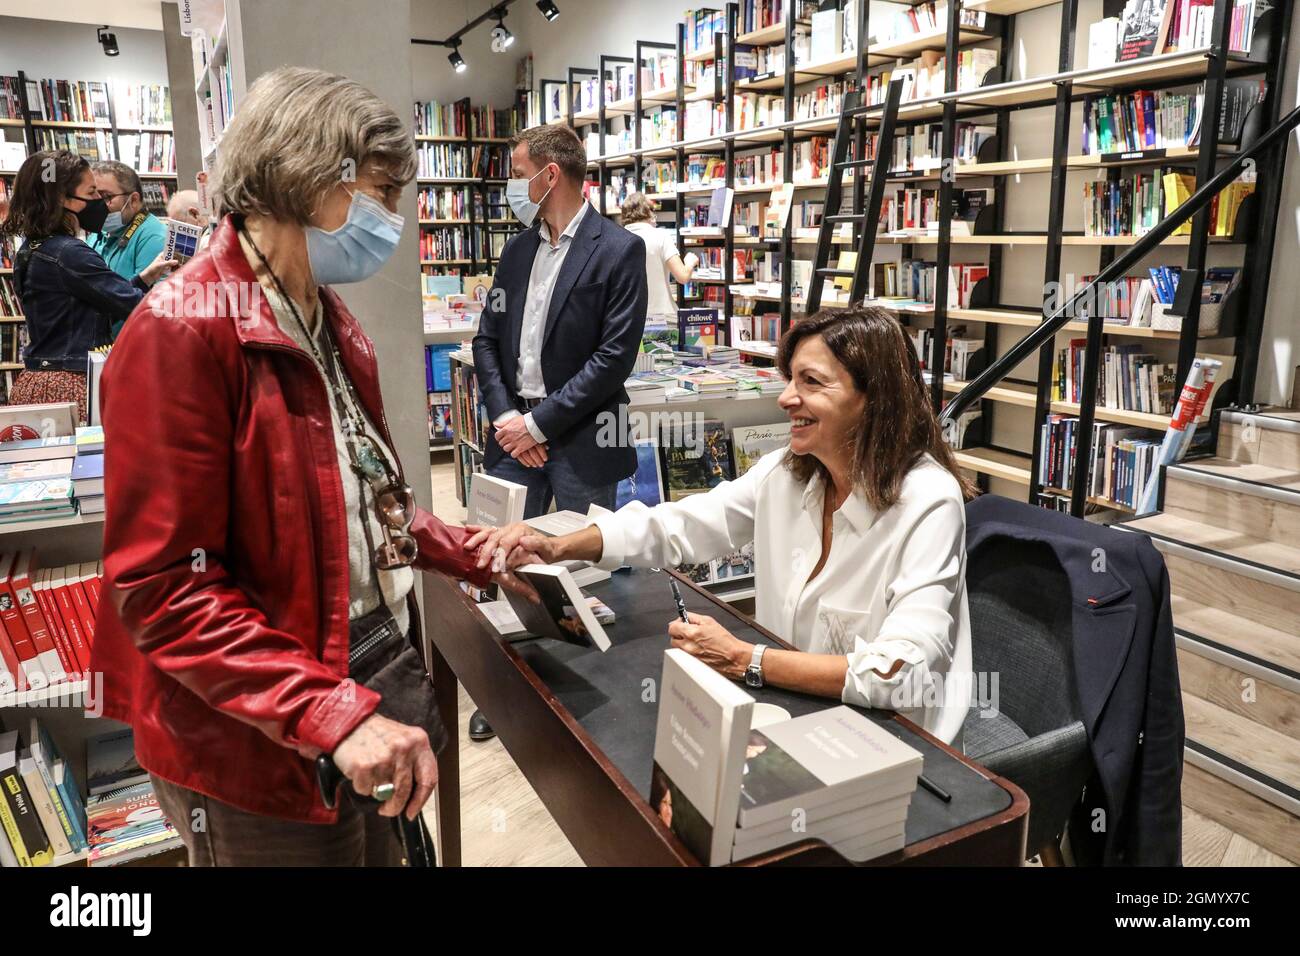 DEDICATION, ANNE HIDALGO WITH HER BOOK IN LE DIVAN BOOKSTORE IN PARIS Stock Photo